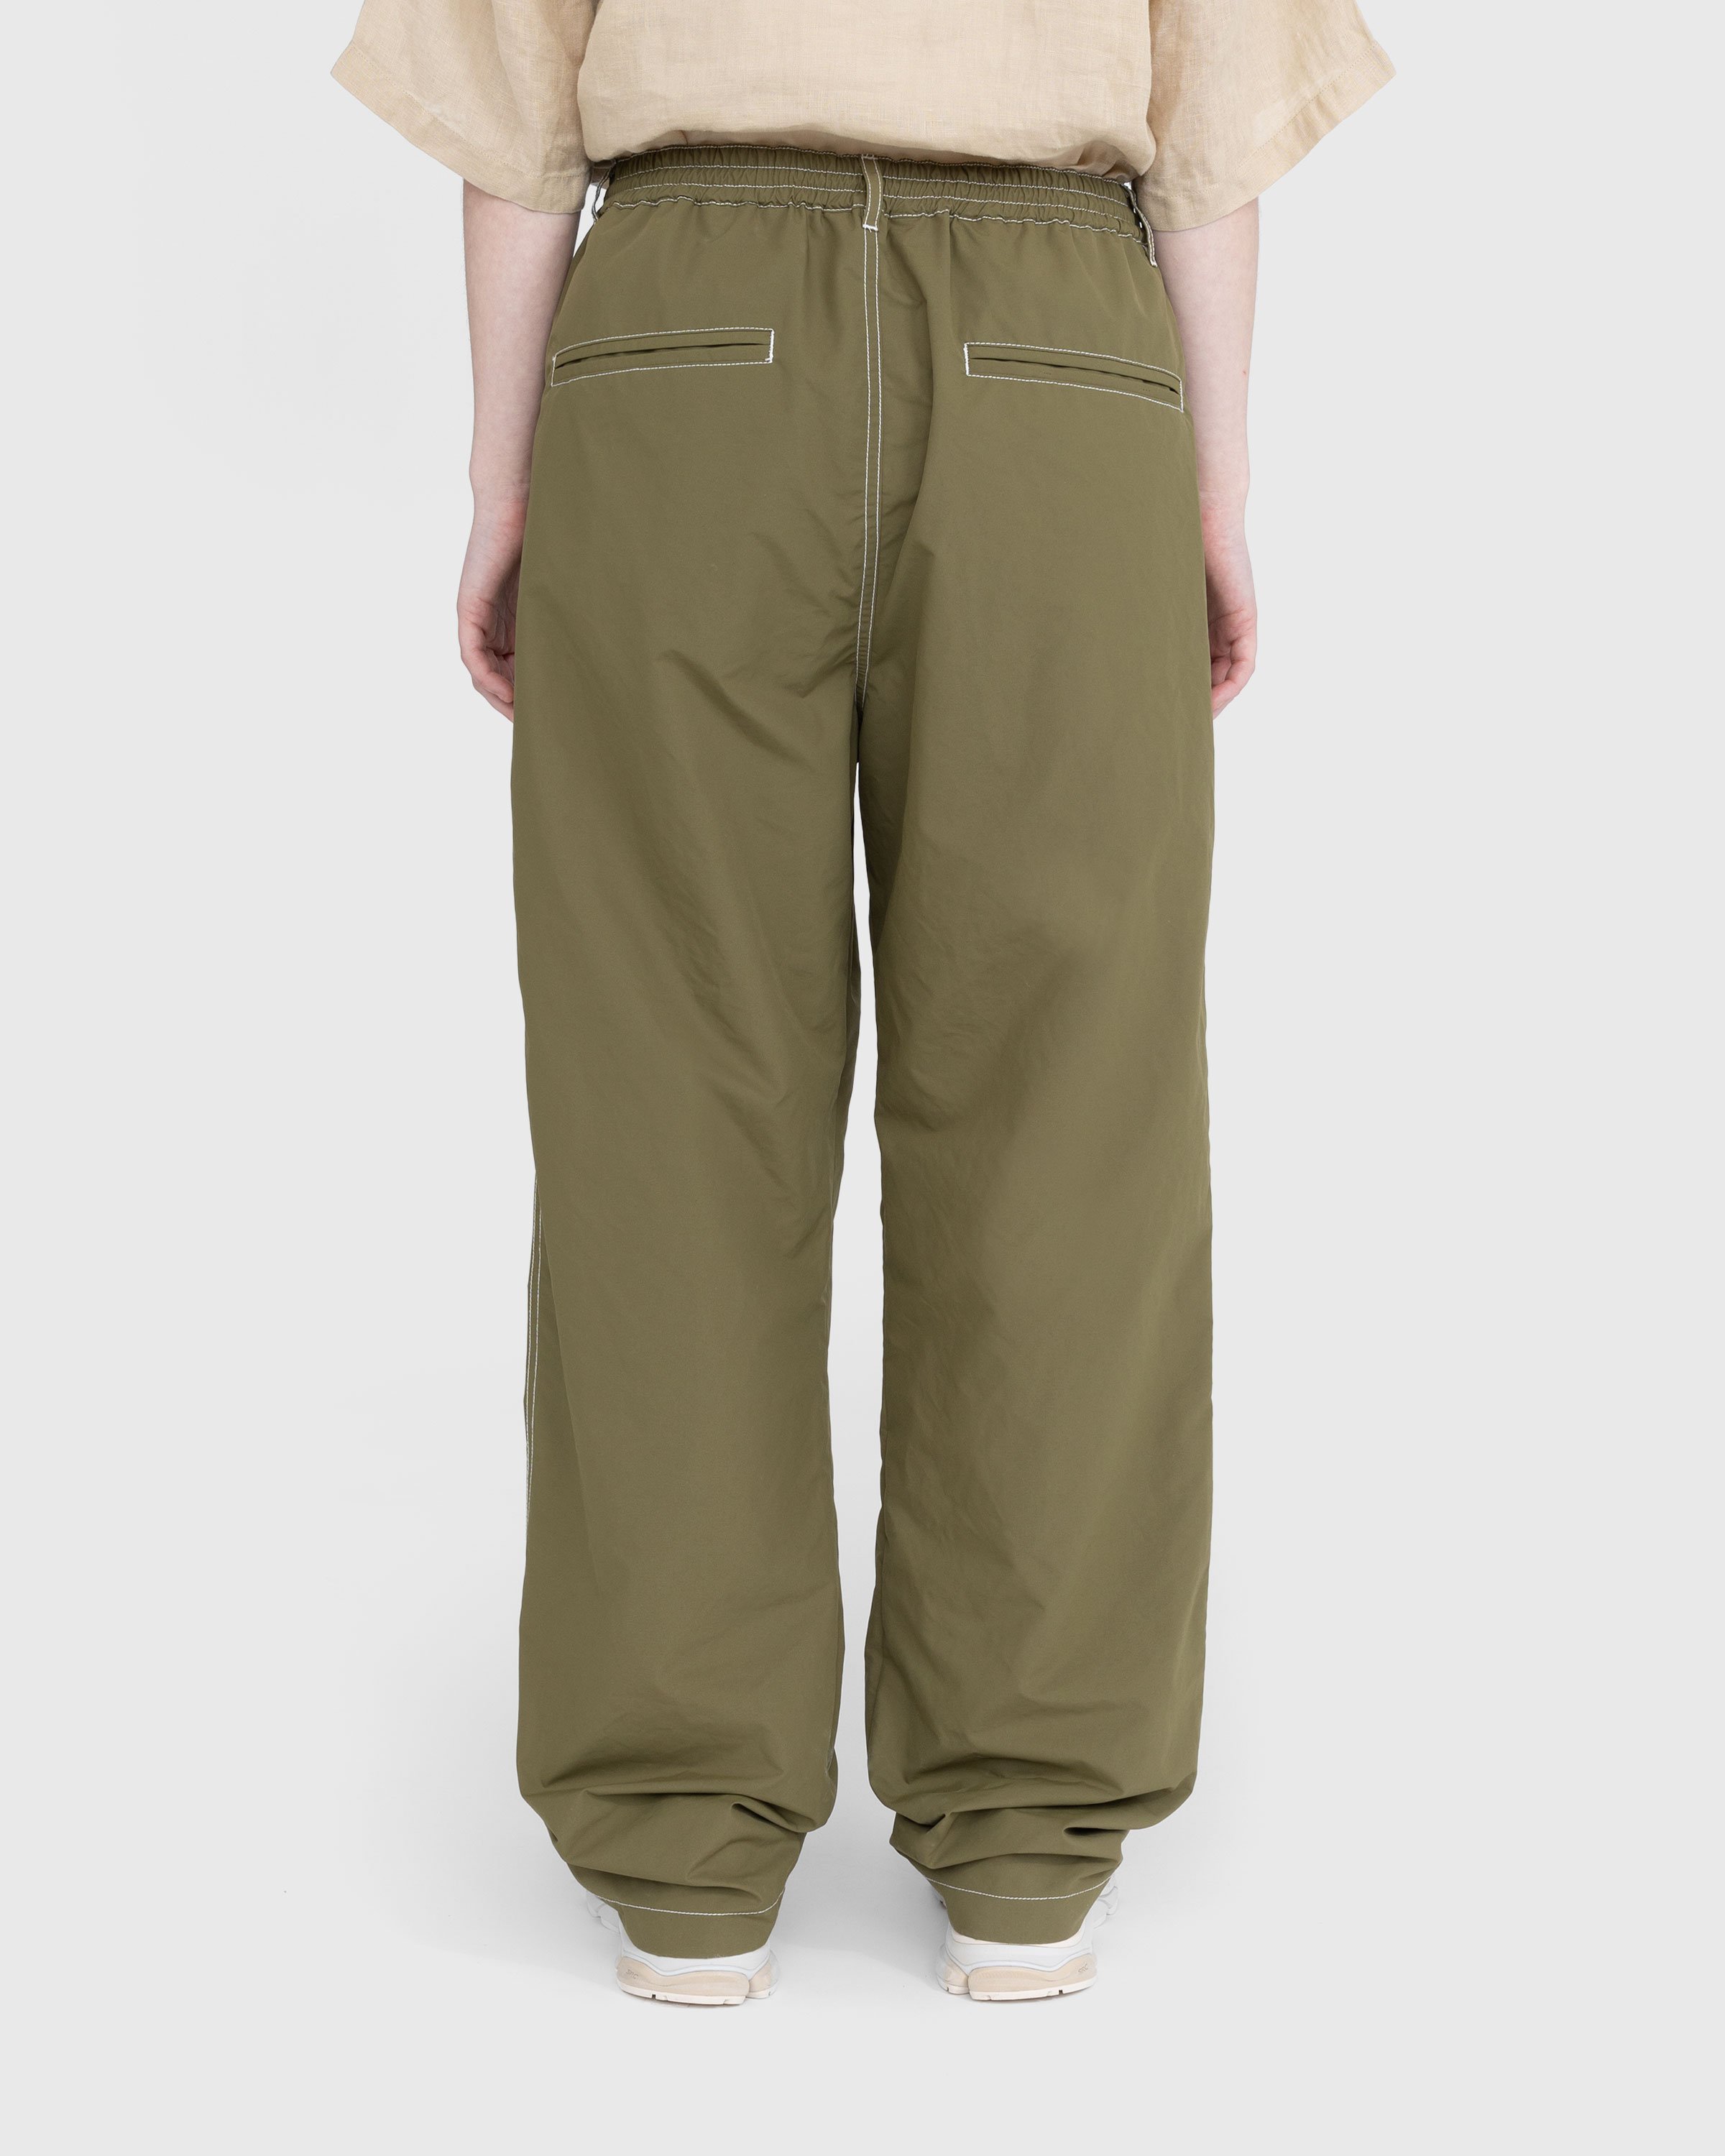 Highsnobiety - Contrast Stitch Pants Khaki - Clothing - Green - Image 3